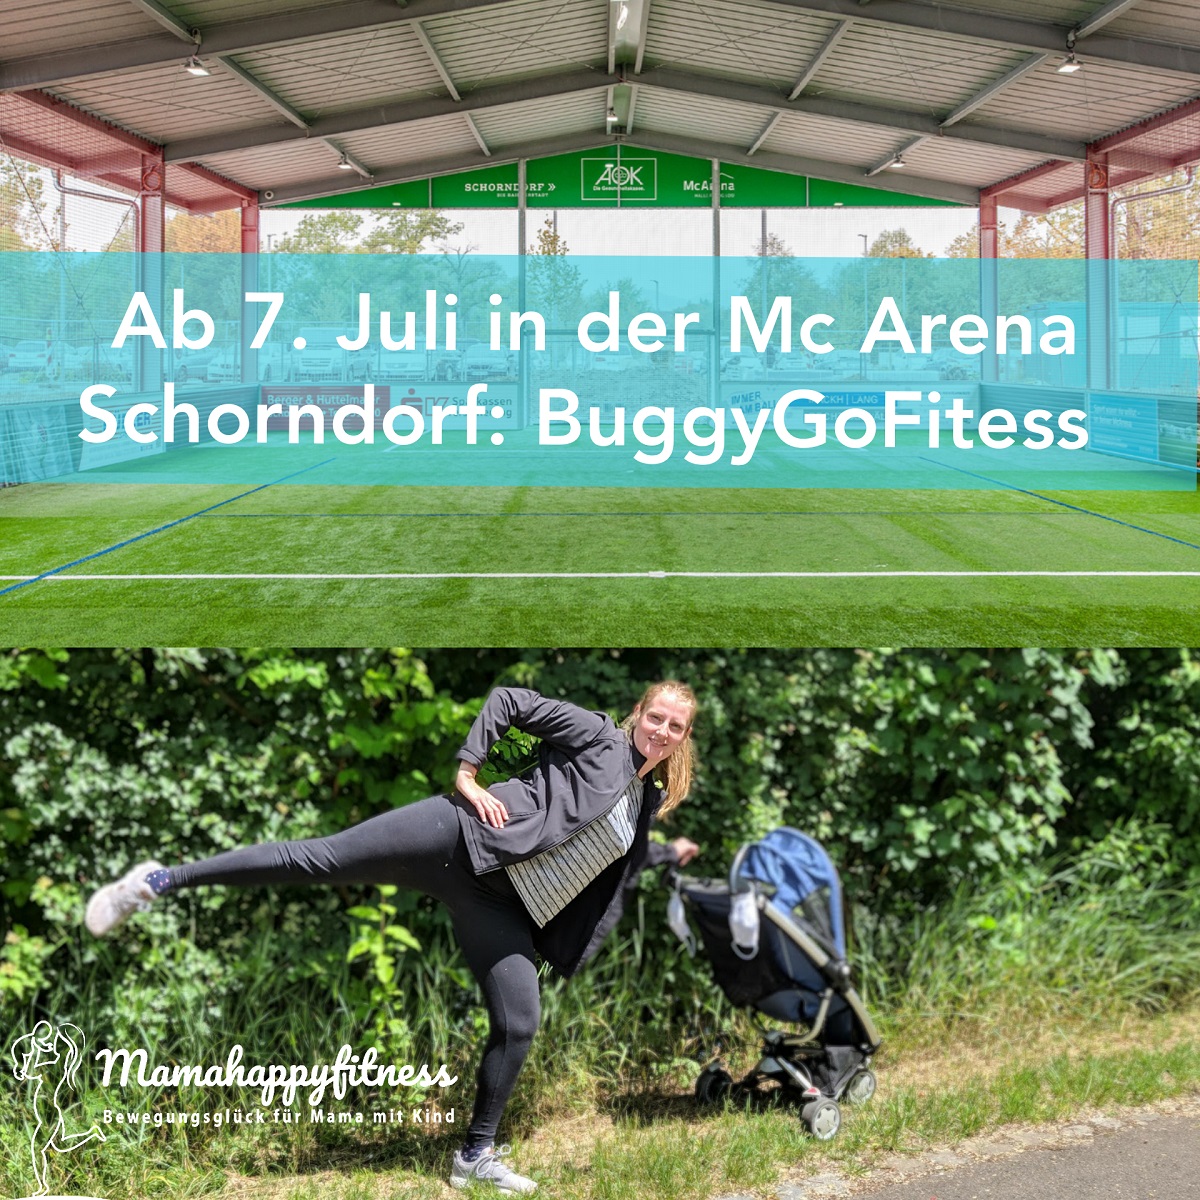 Buggy Fitness Schorndorf